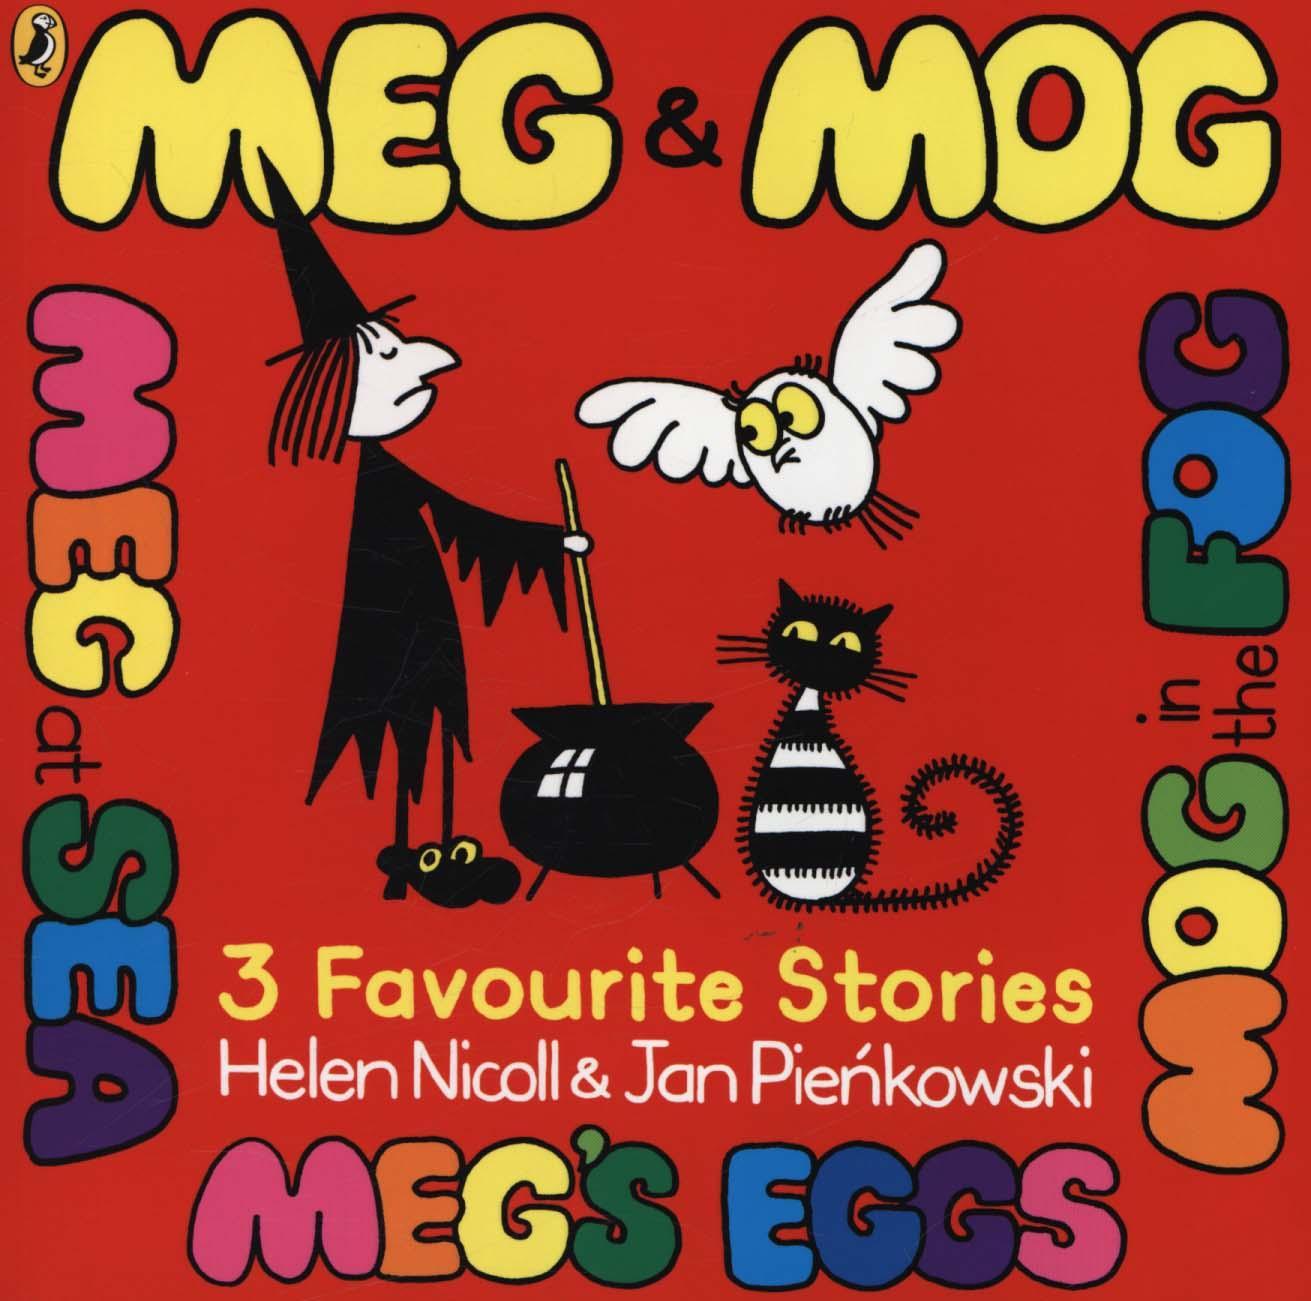 Meg and Mog: Three Favourite Stories